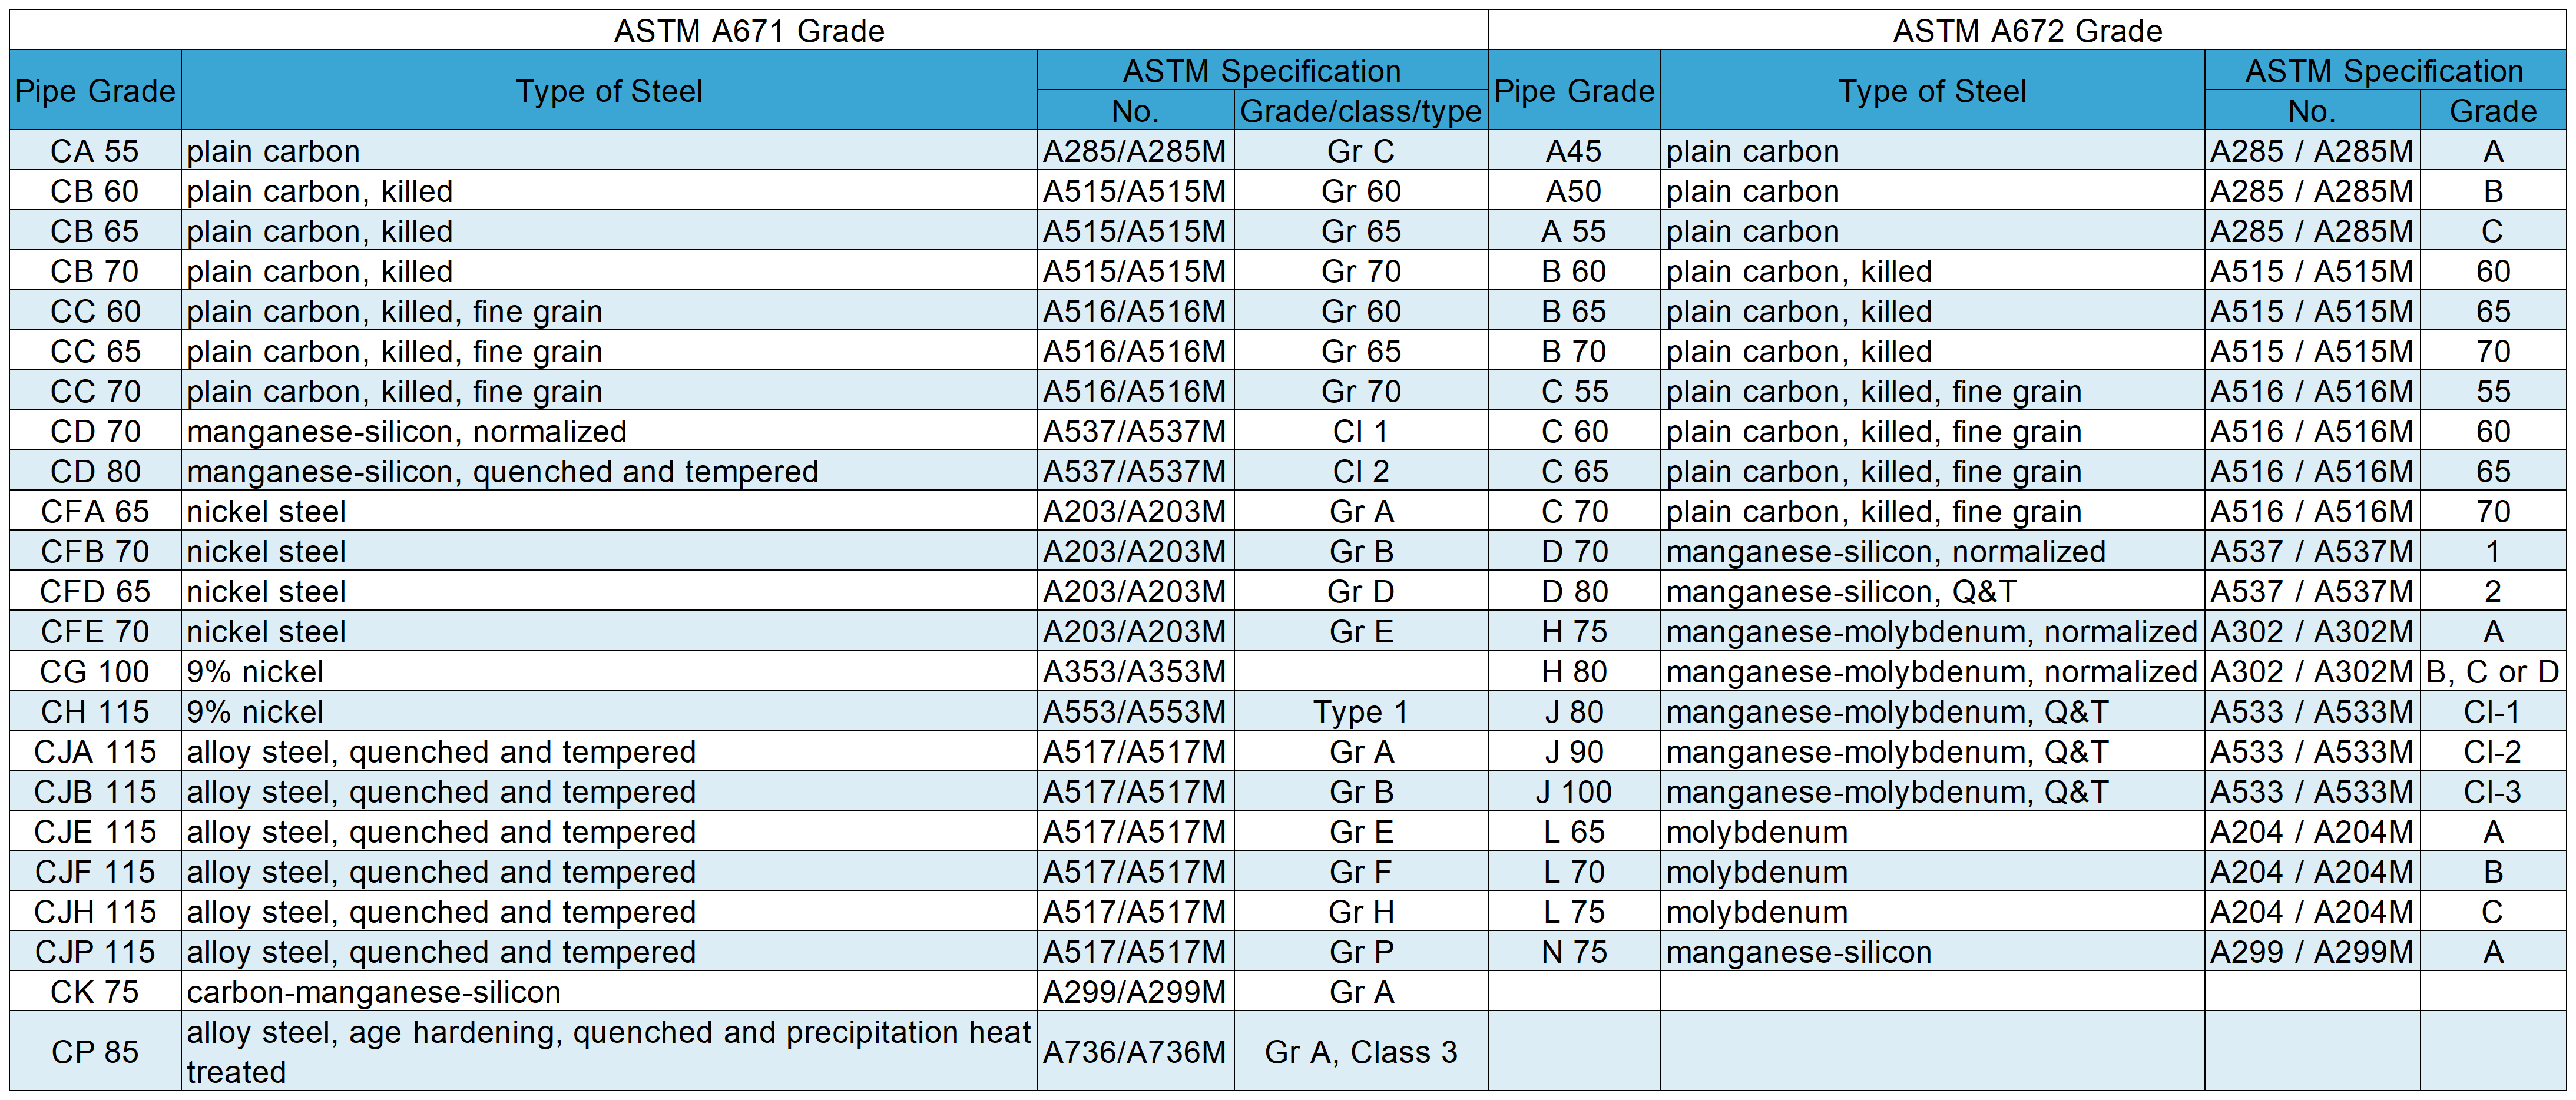 astm a671 განსხვავდება a672-ისგან: კლასი